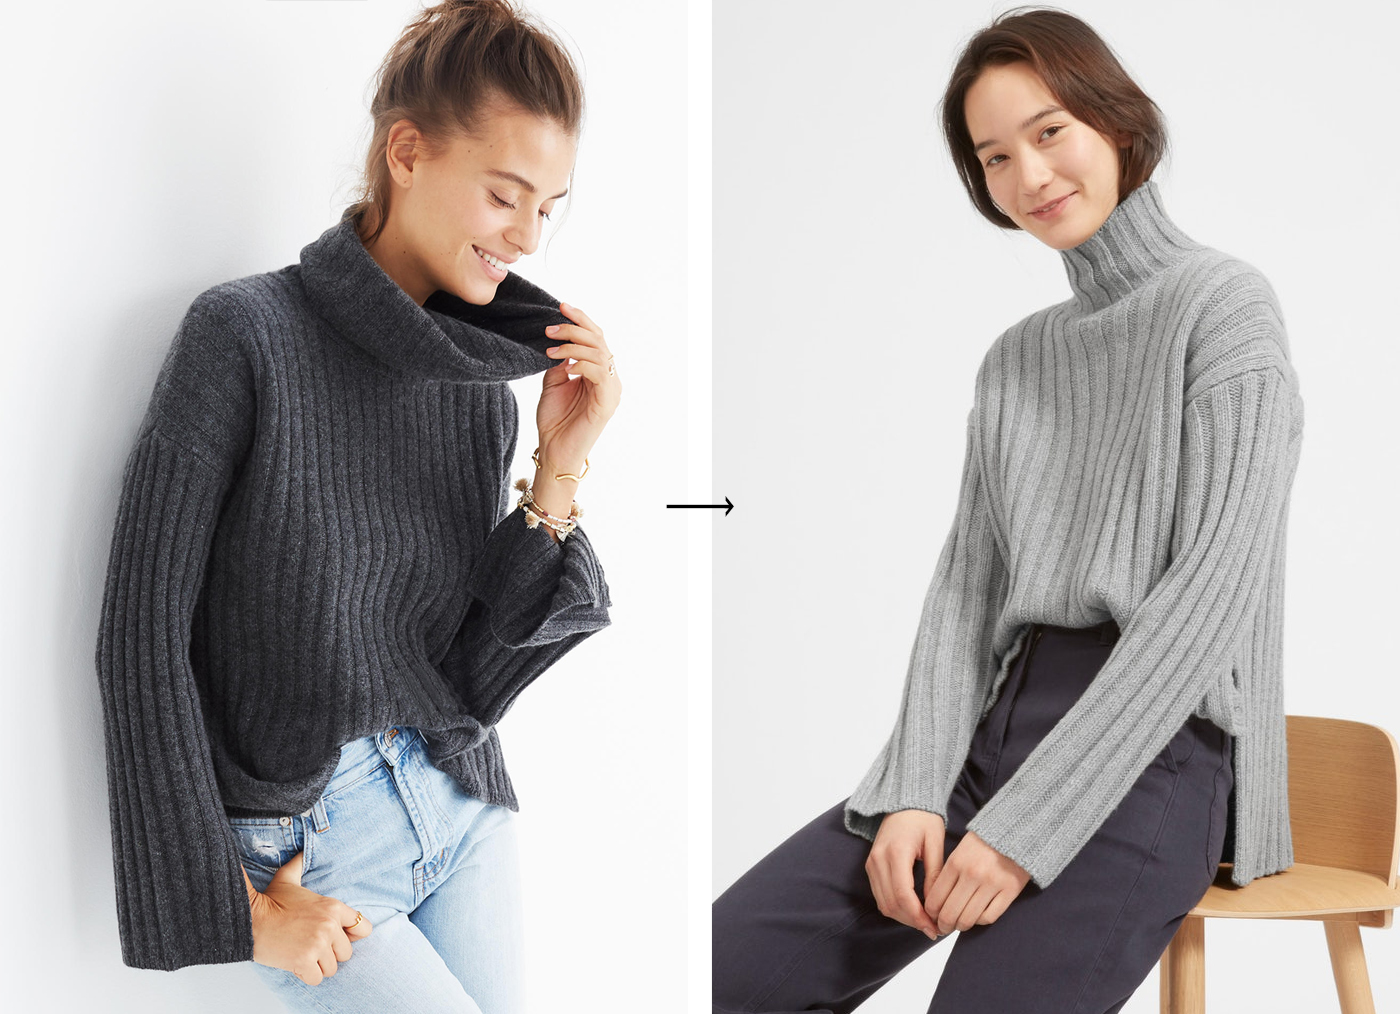 Feel Good Winter Wardrobe Swaps - Madewell Slit-sleeve Turtleneck Sweater / Everlane Ribbed Oversized Turtleneck.